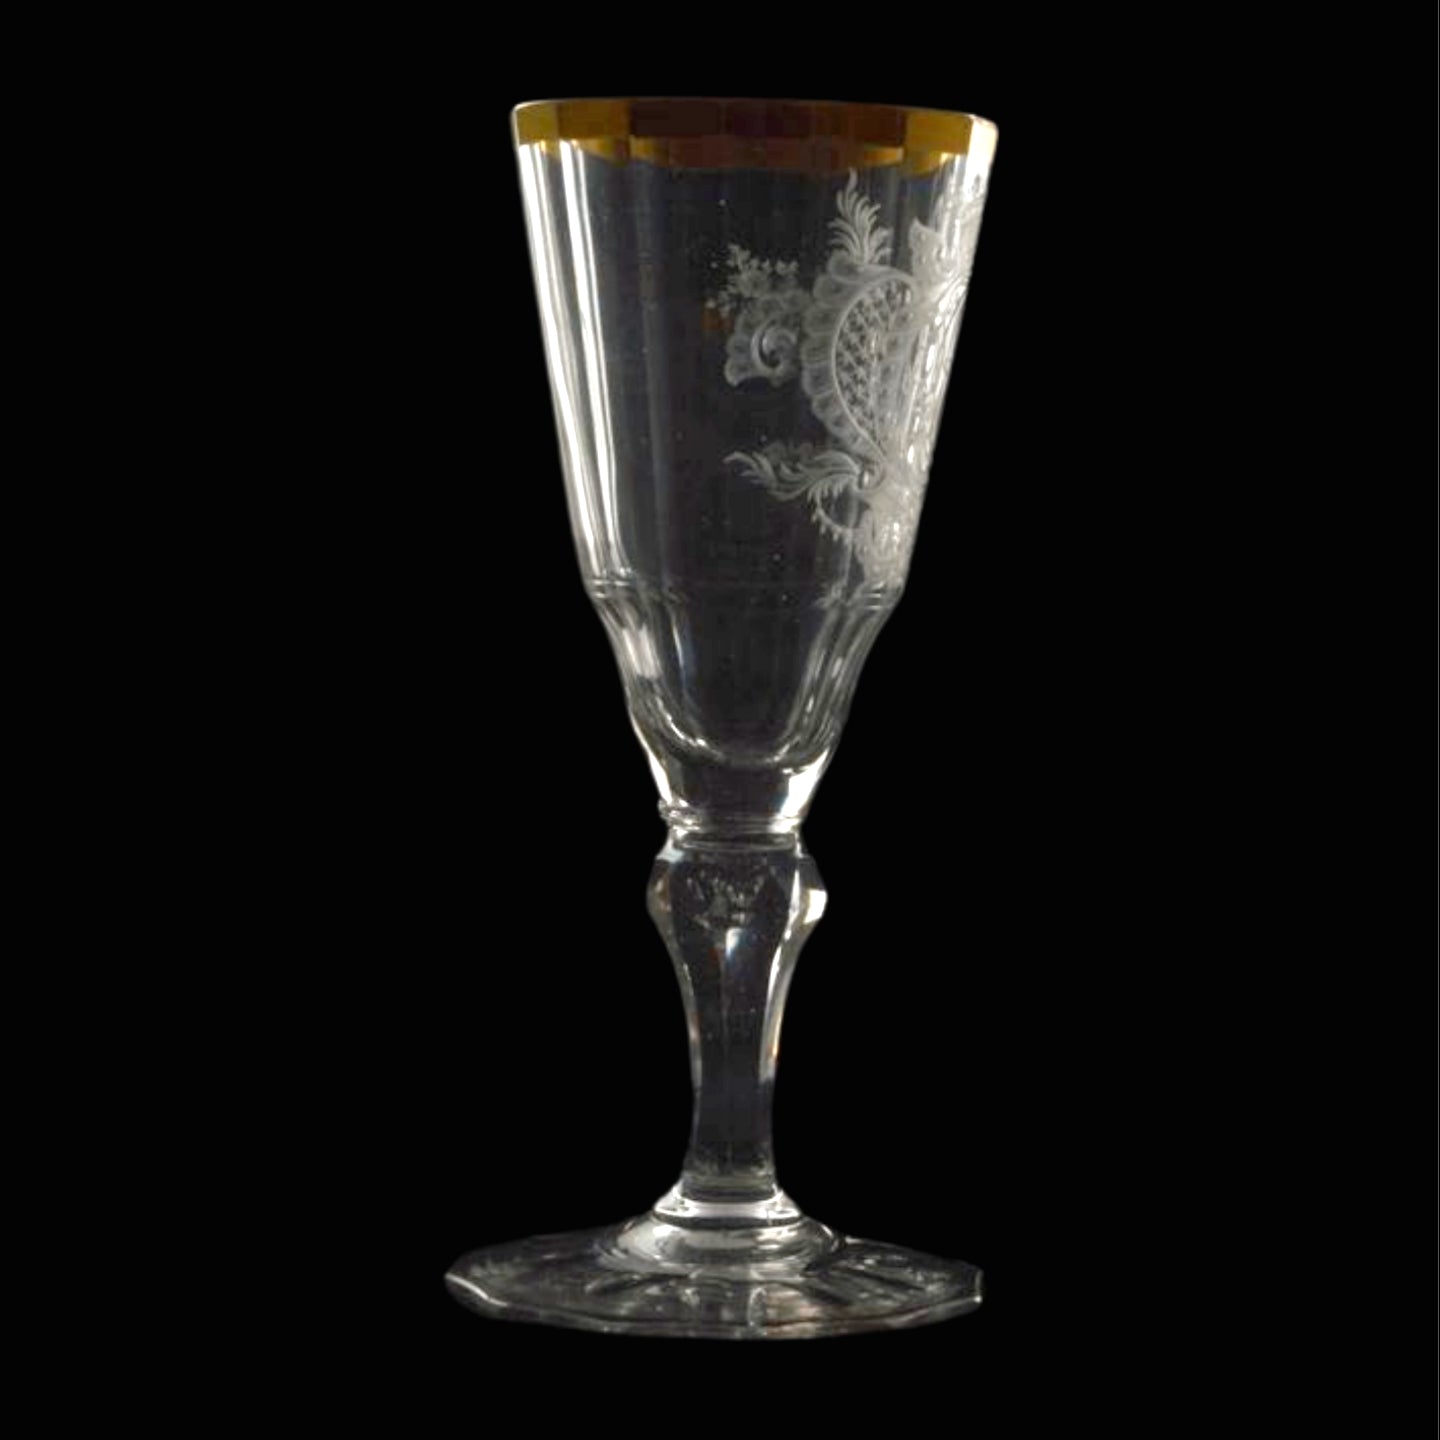 Silesian wine glass